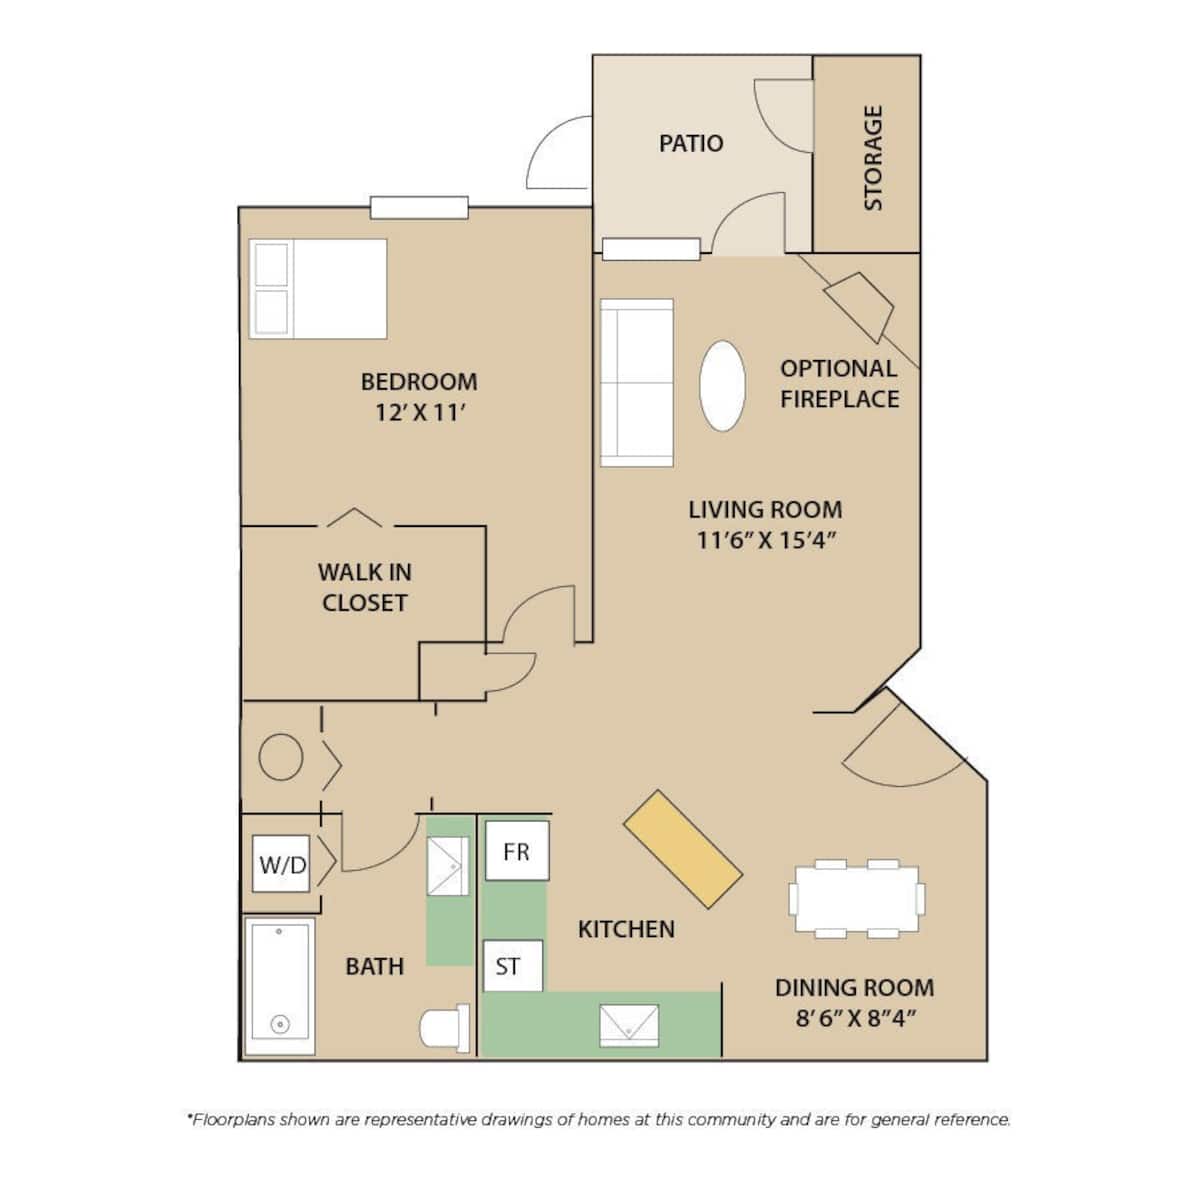 Floorplan diagram for Cape Elizabeth, showing 1 bedroom